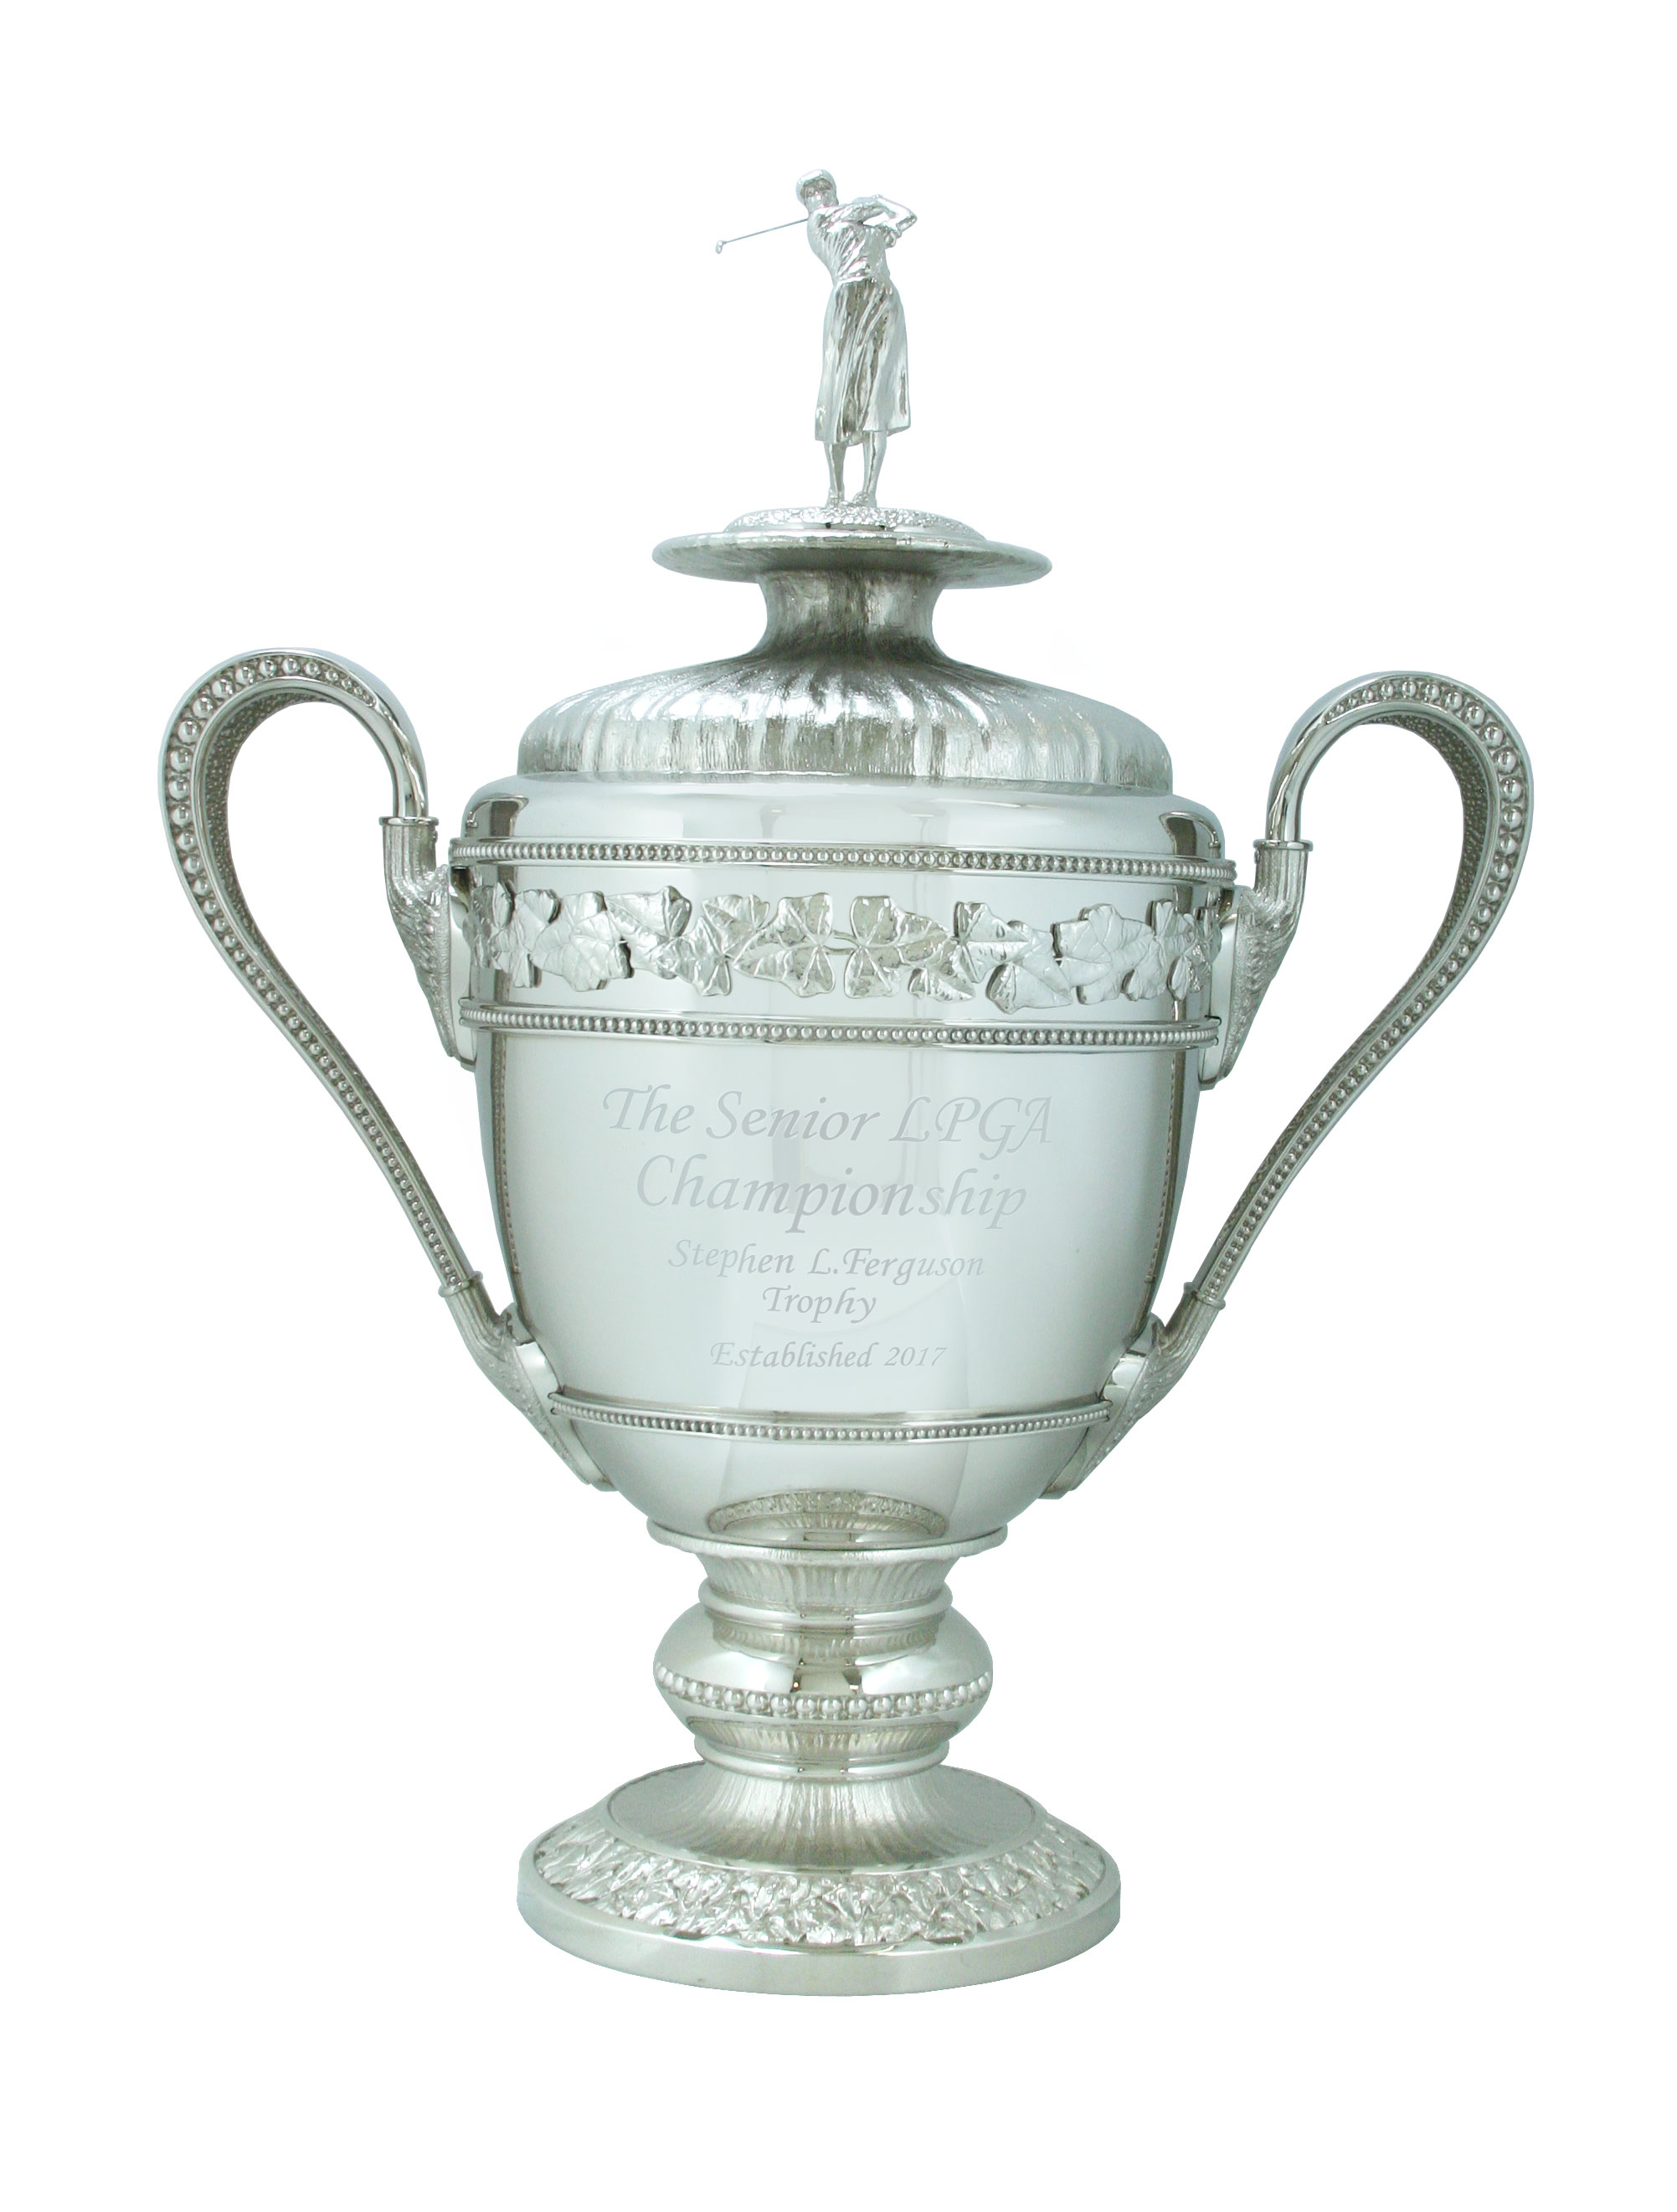 Senior LPGA Championship “Stephen L. Ferguson” Trophy made by Malcolm DeMille